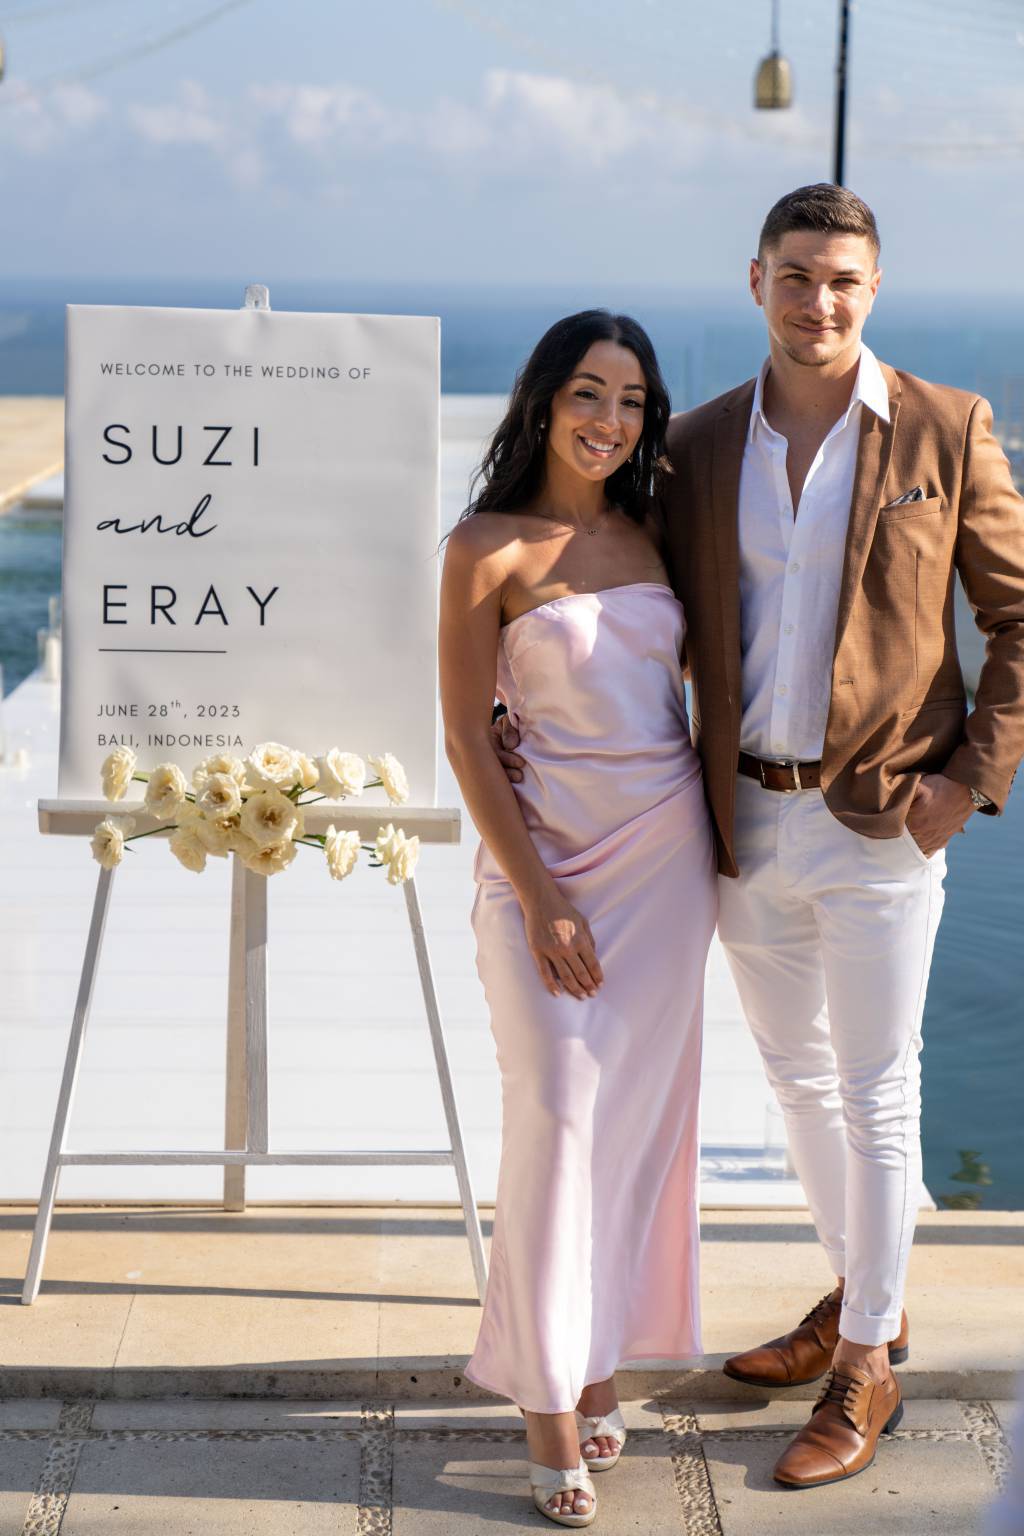 The Wedding of Suzi & Eray